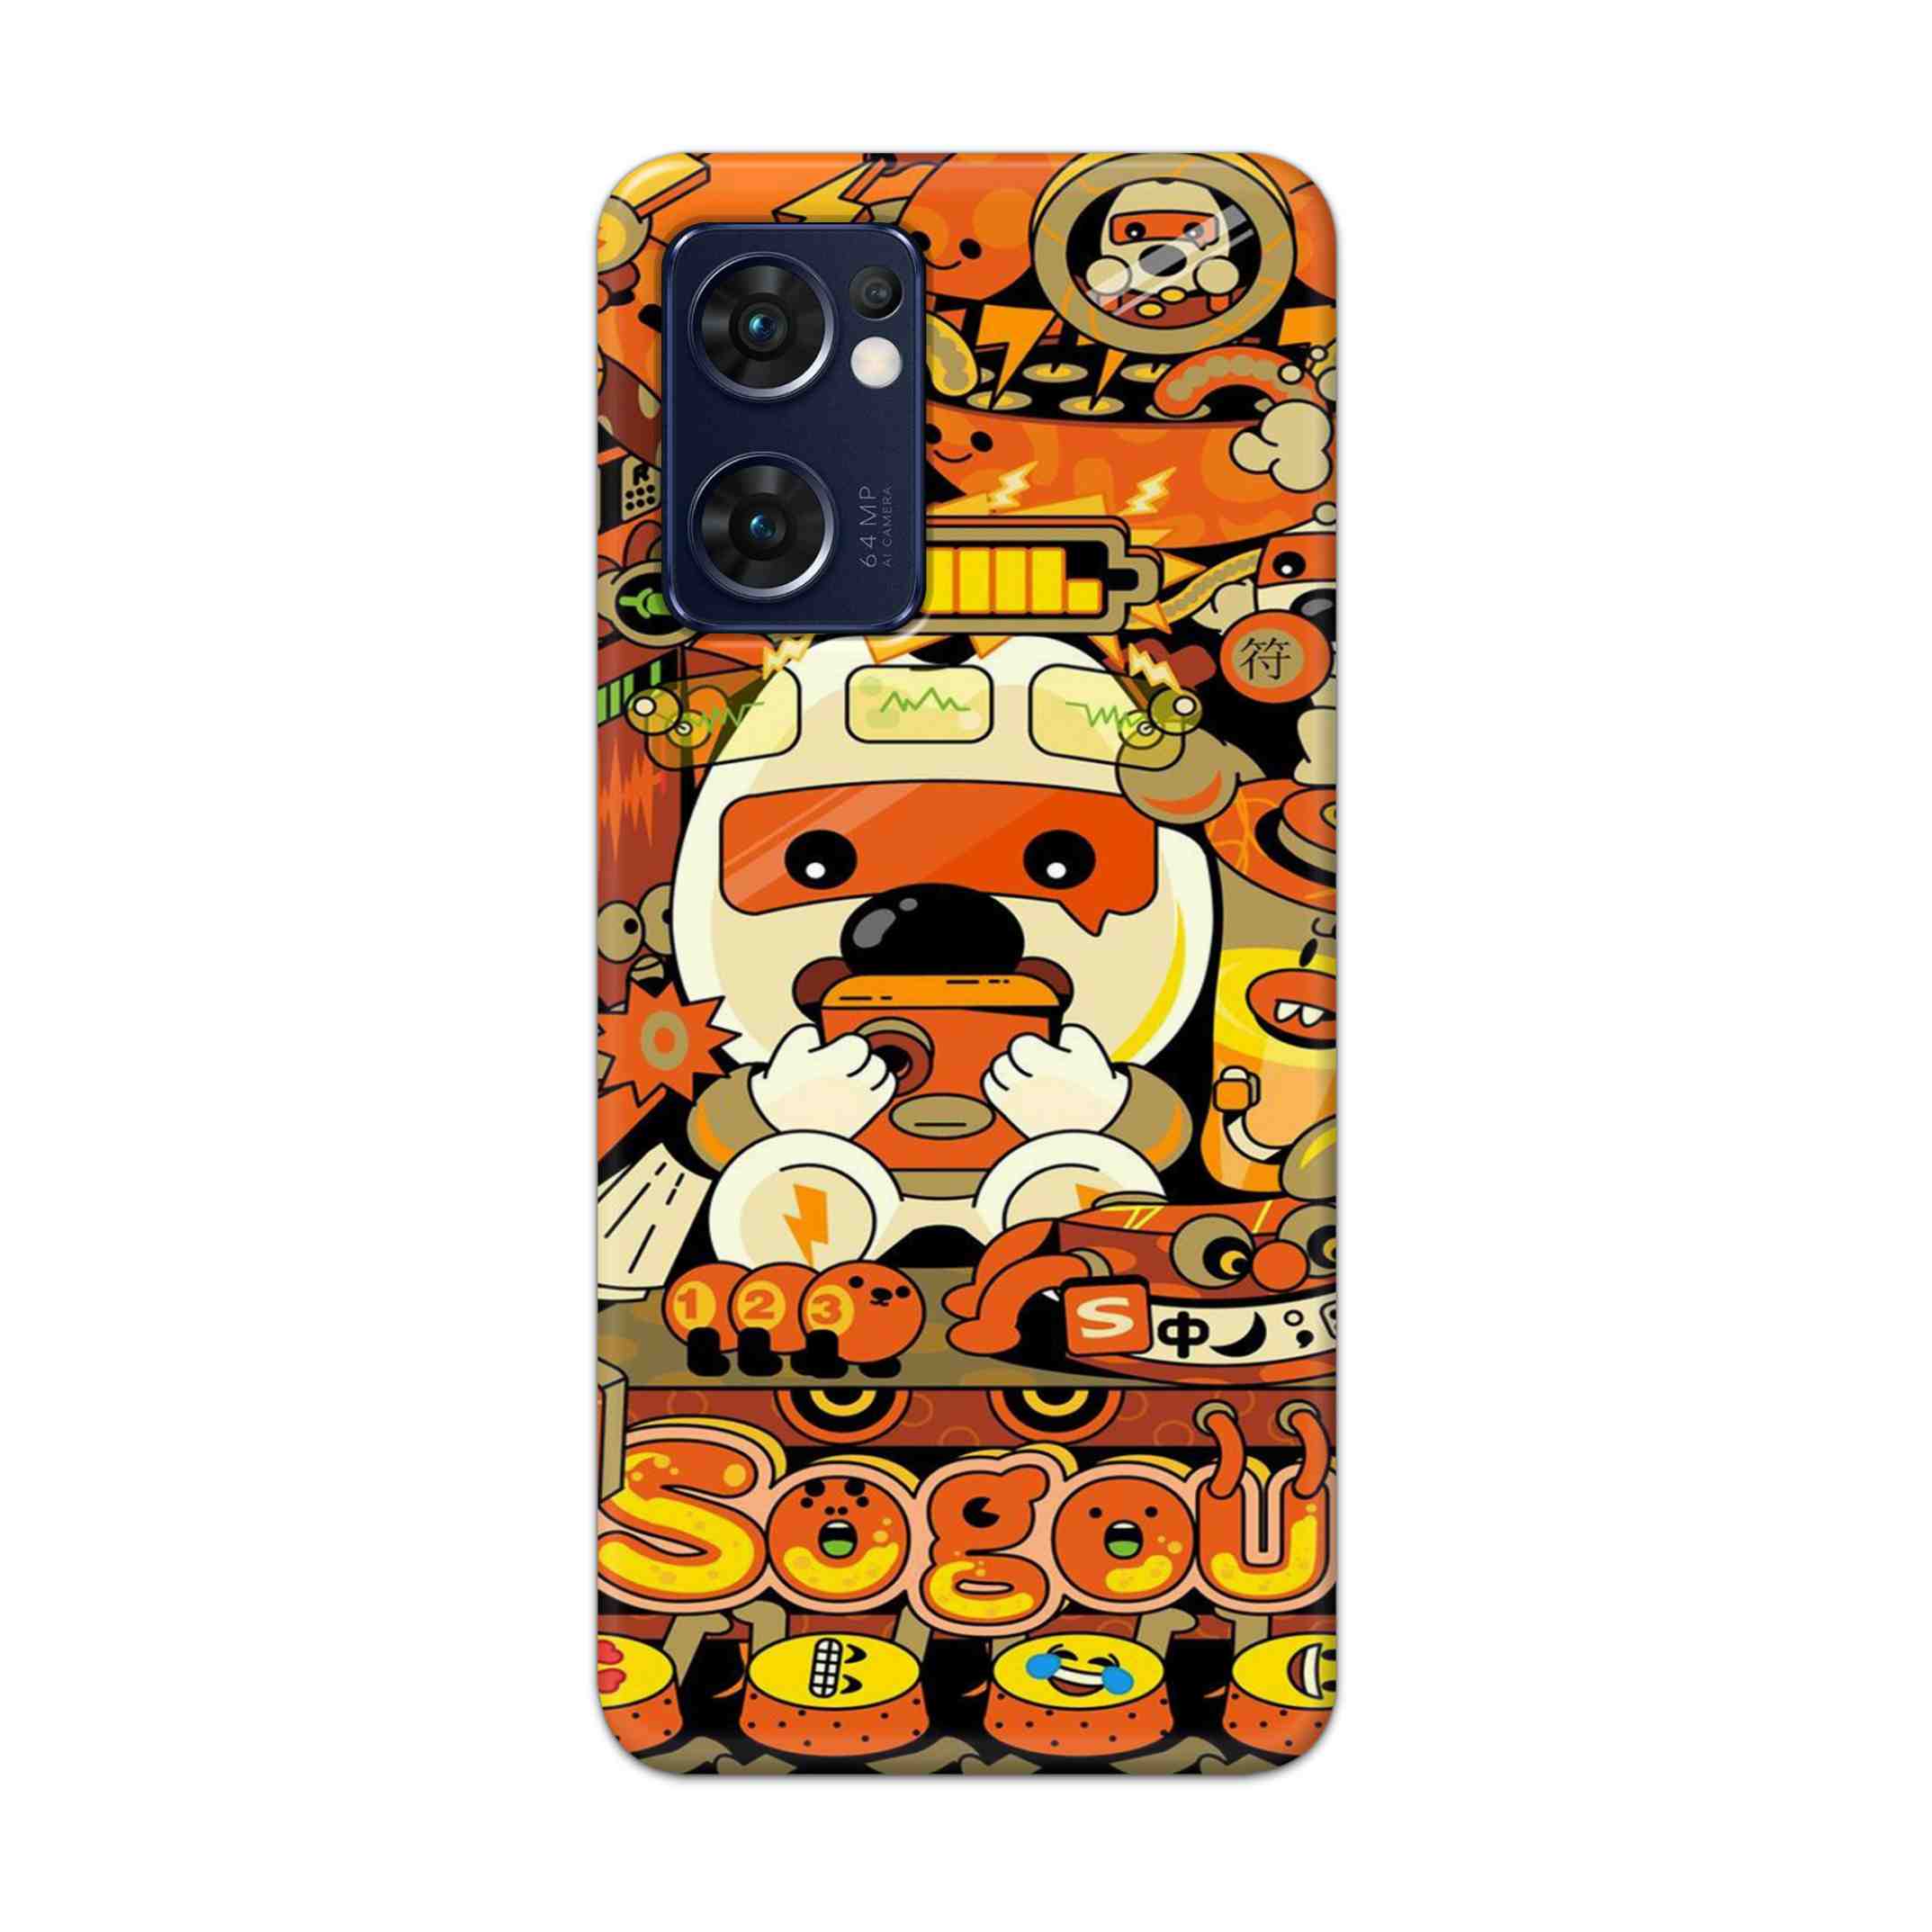 Buy Sogou Hard Back Mobile Phone Case Cover For Reno 7 5G Online